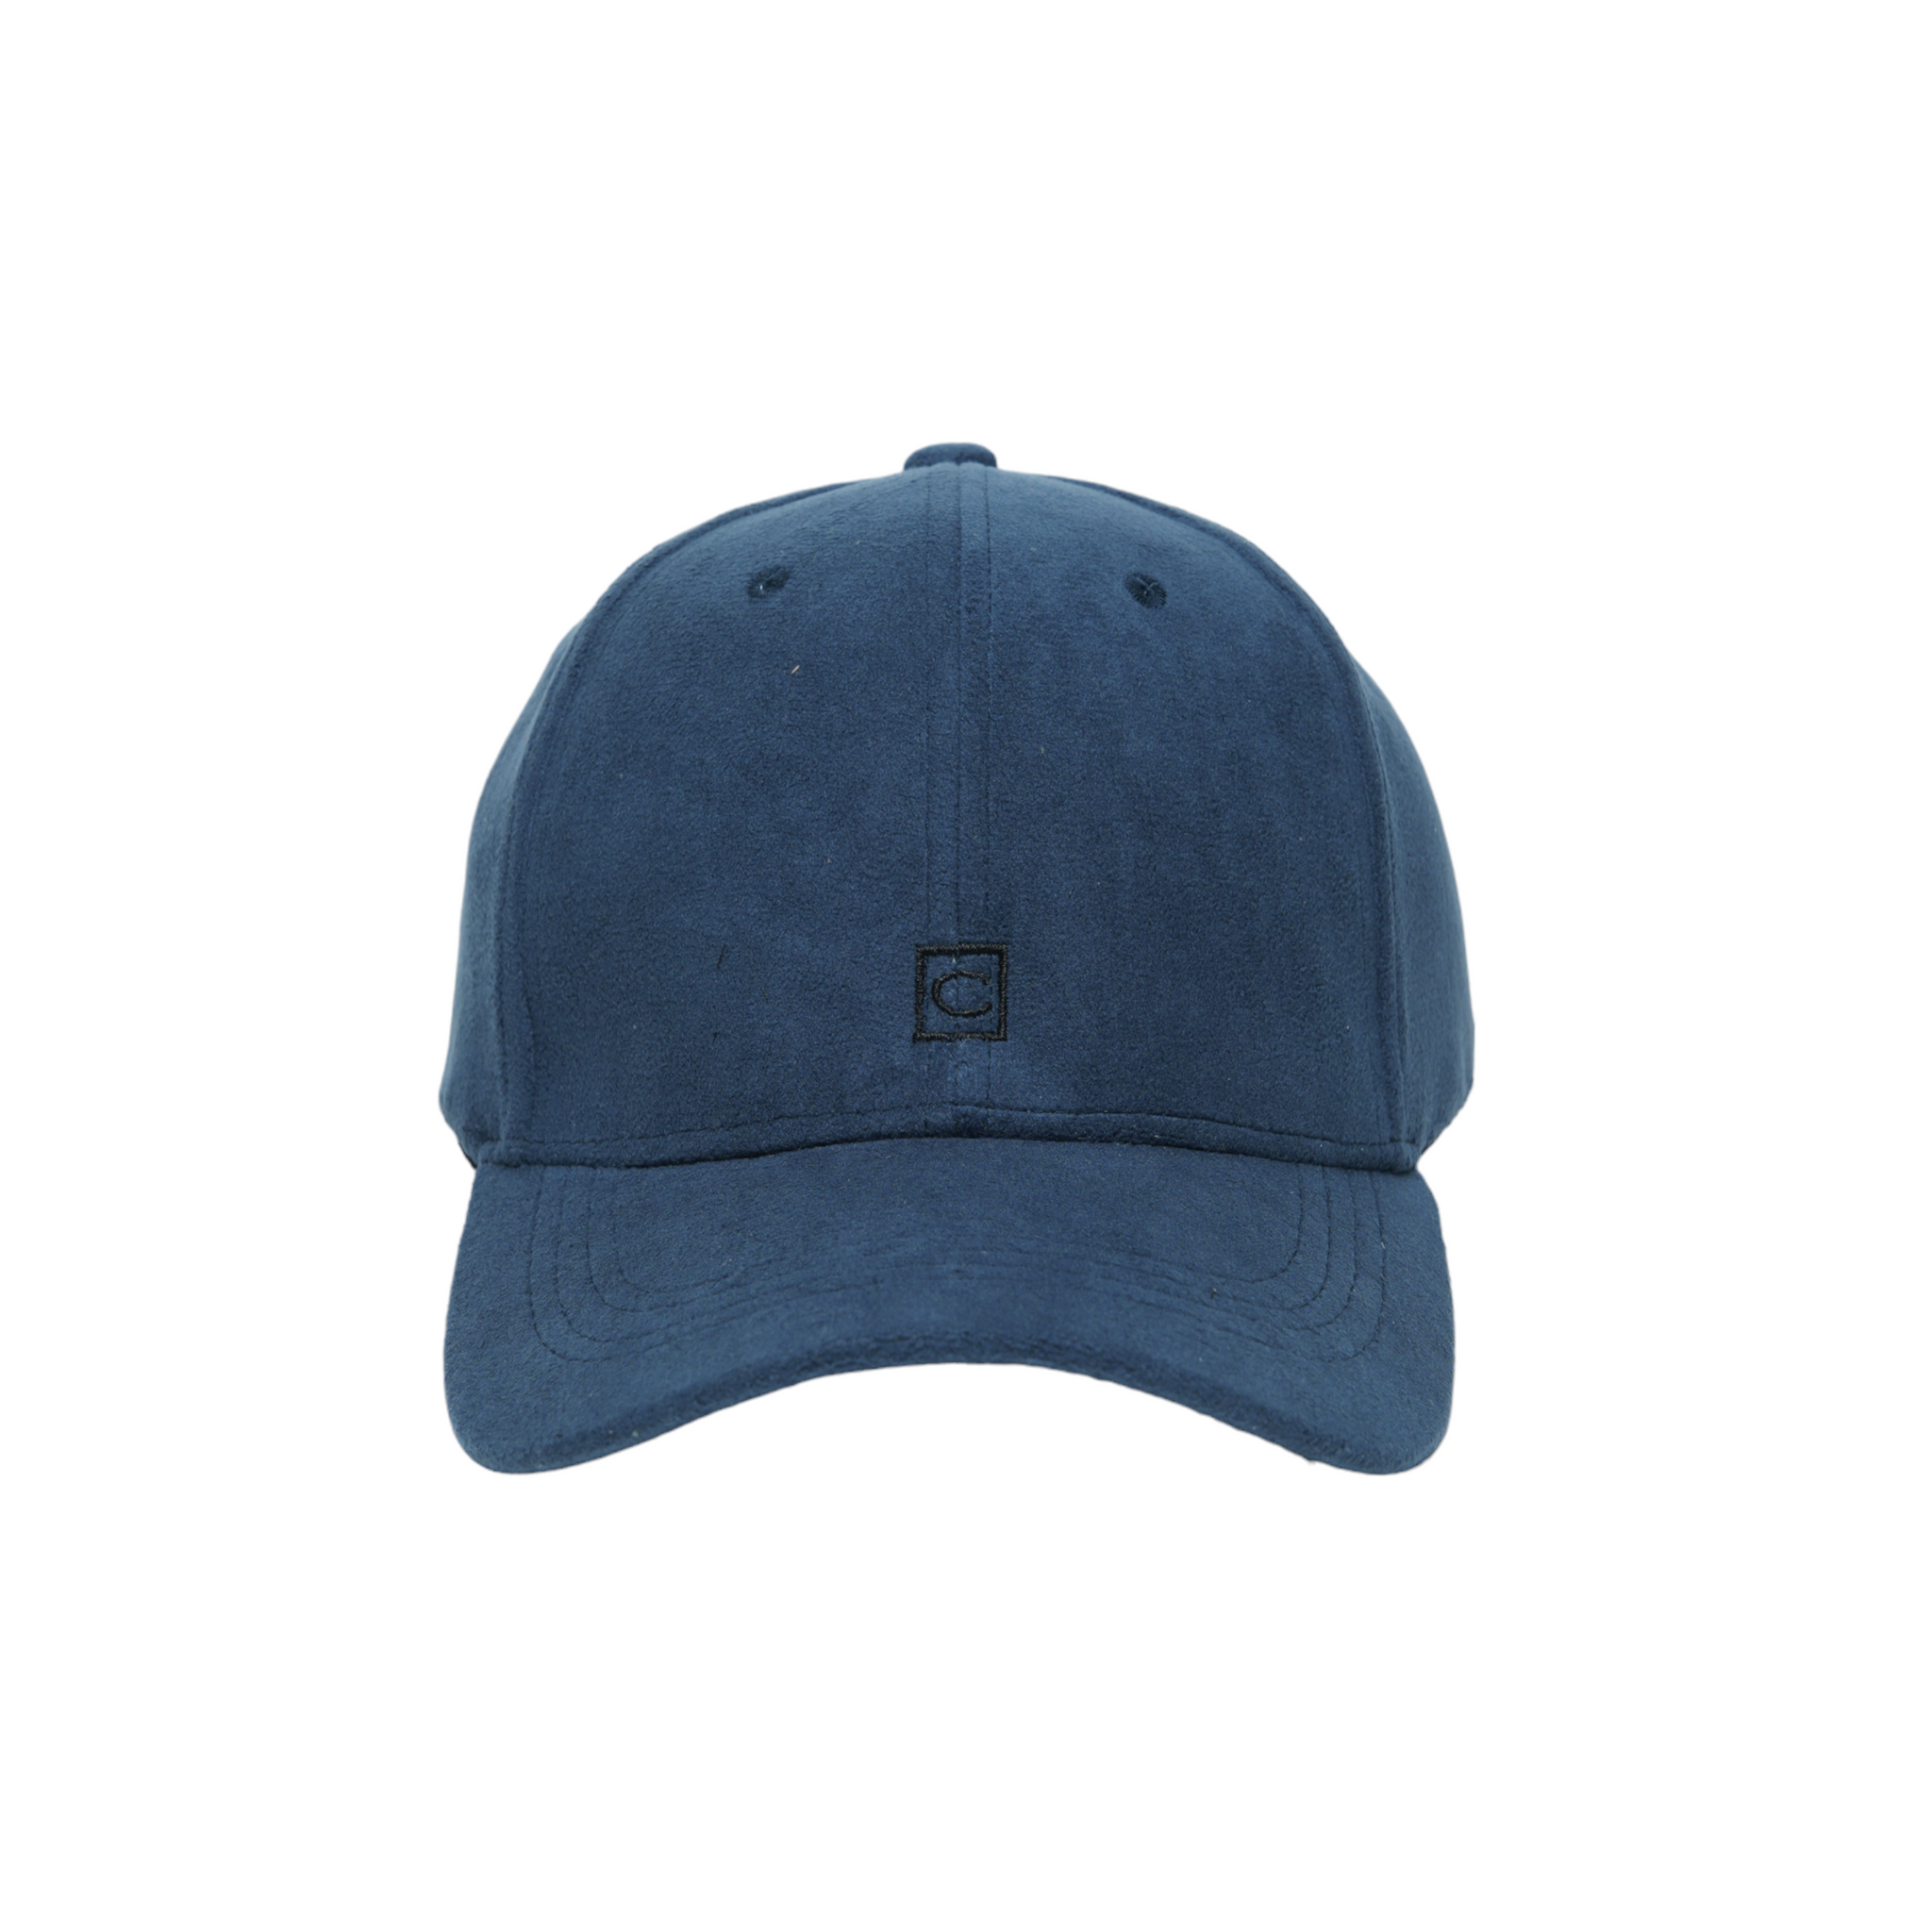 Chokore Structured Suede Baseball Cap (Navy Blue)